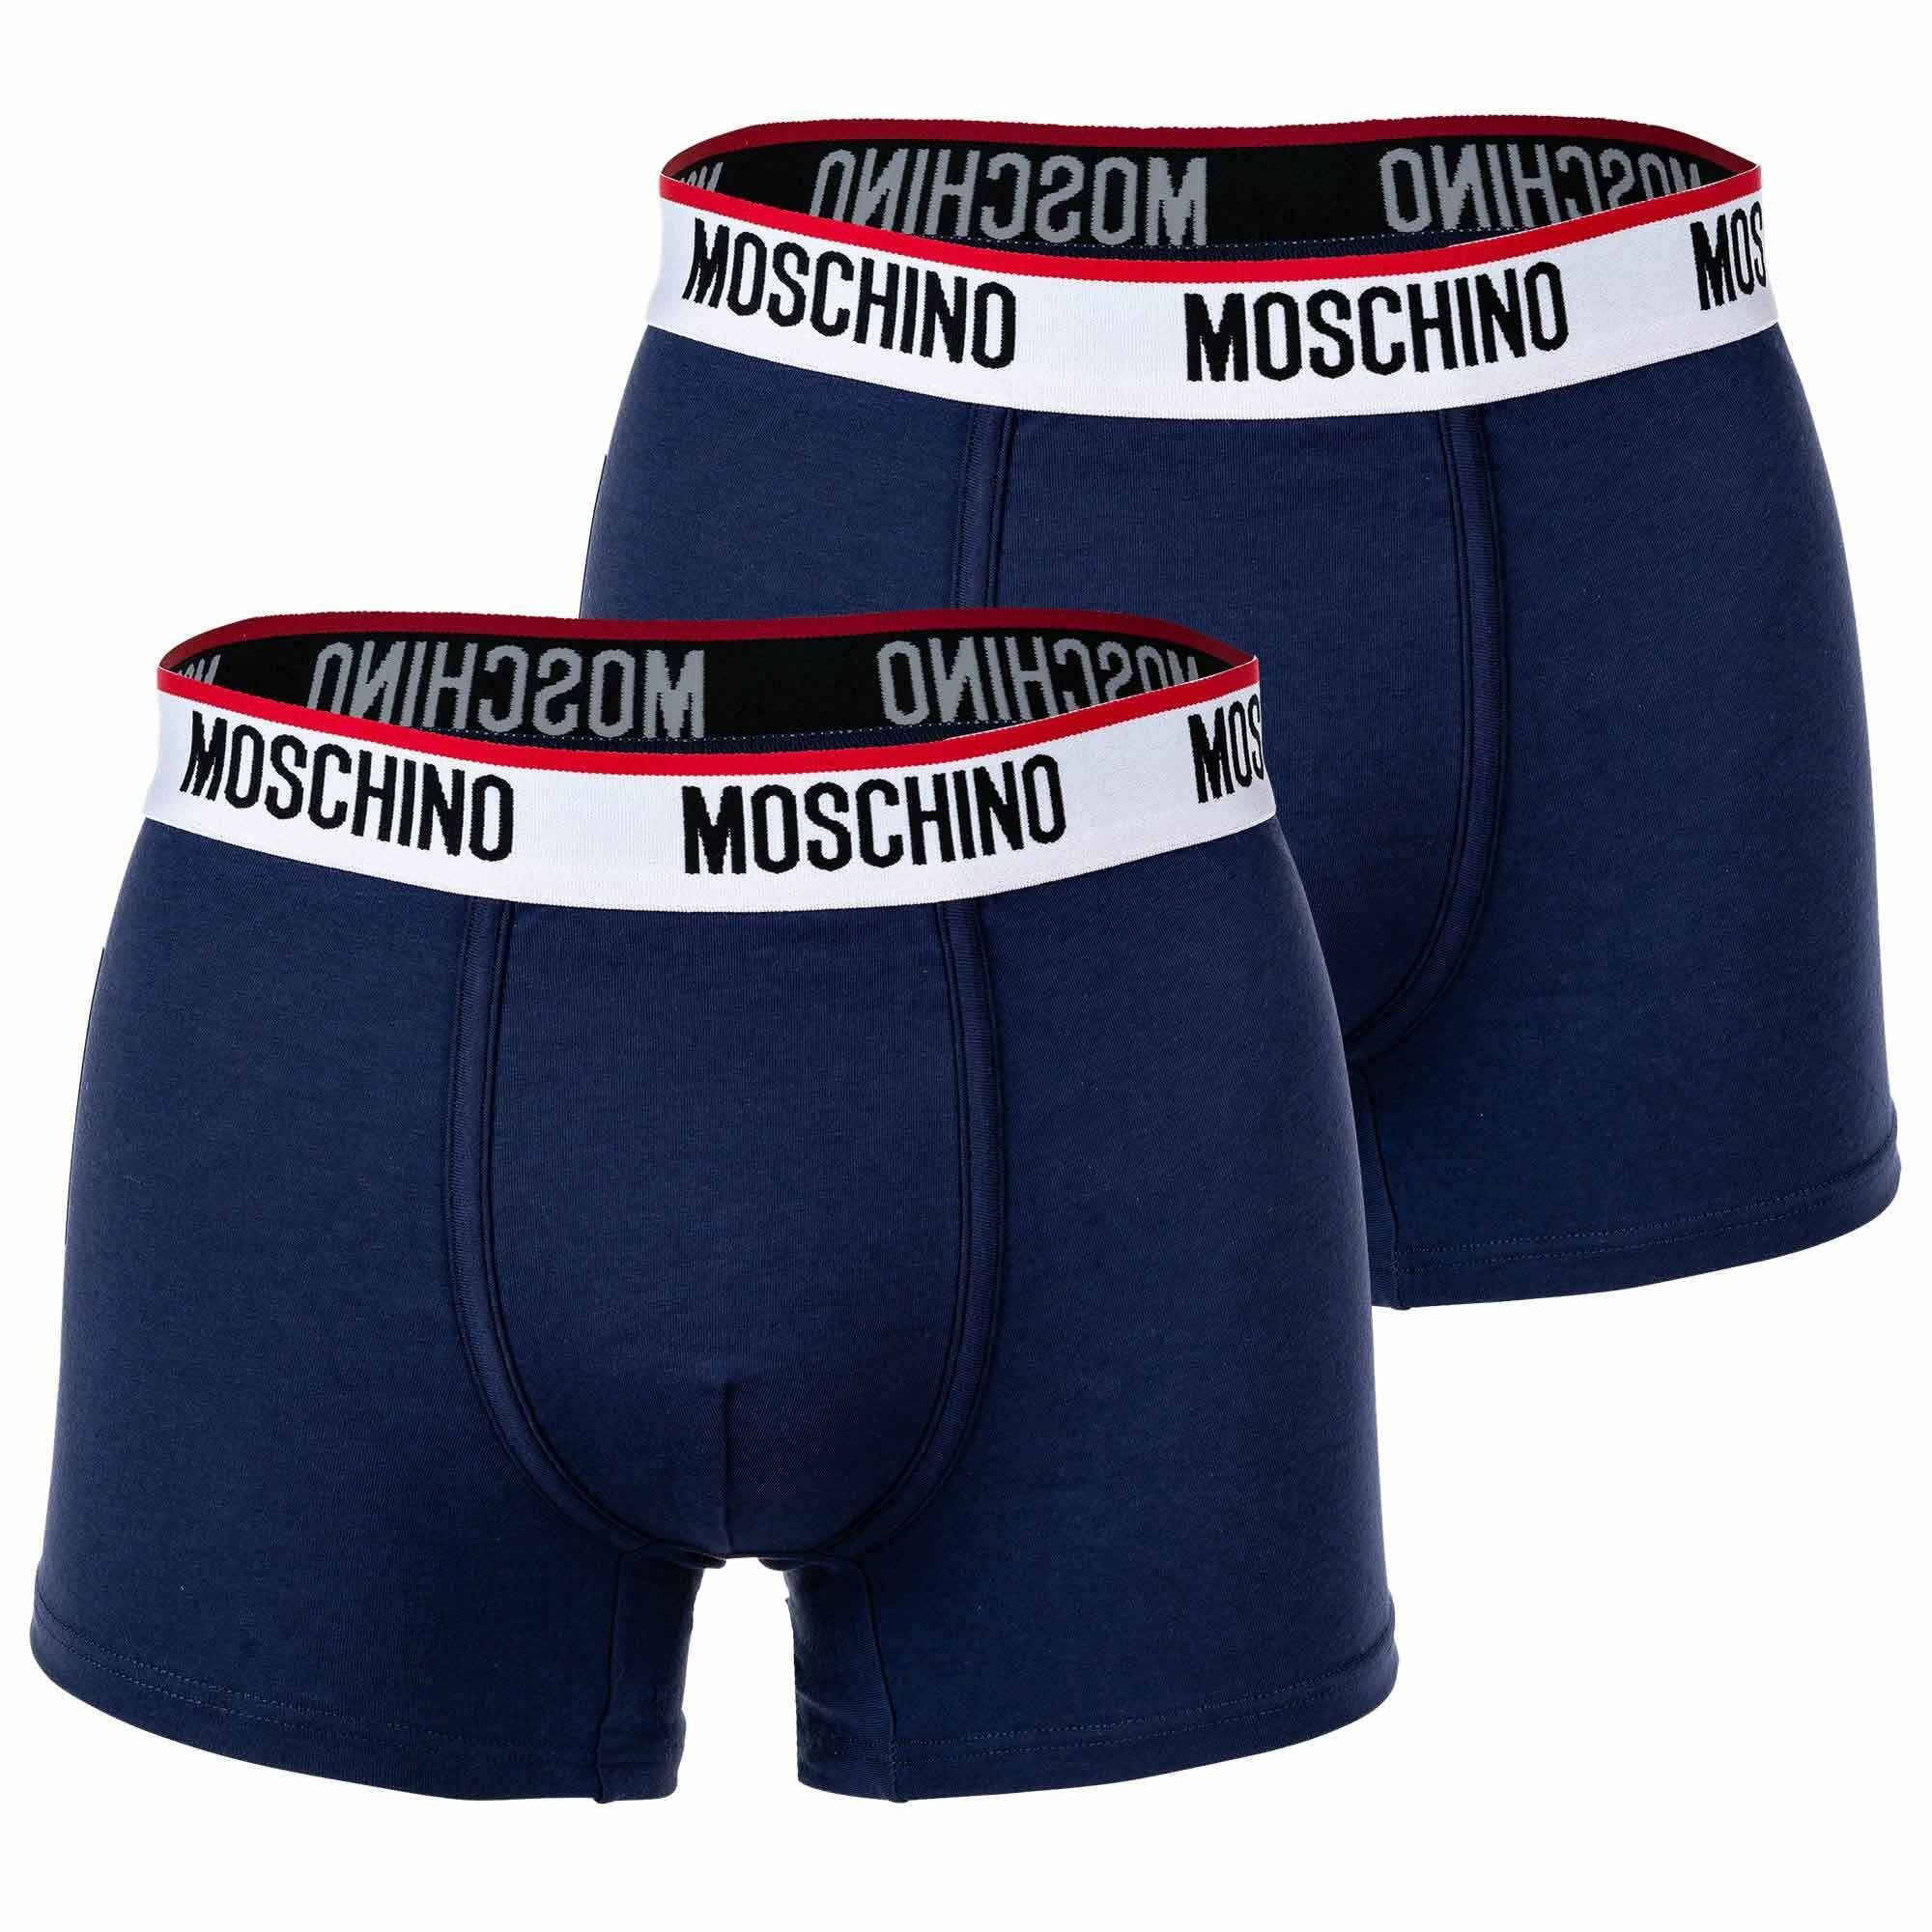 Moschino Boxer Herren Trunks 2er Pack - Boxershorts, Unterhose Blau